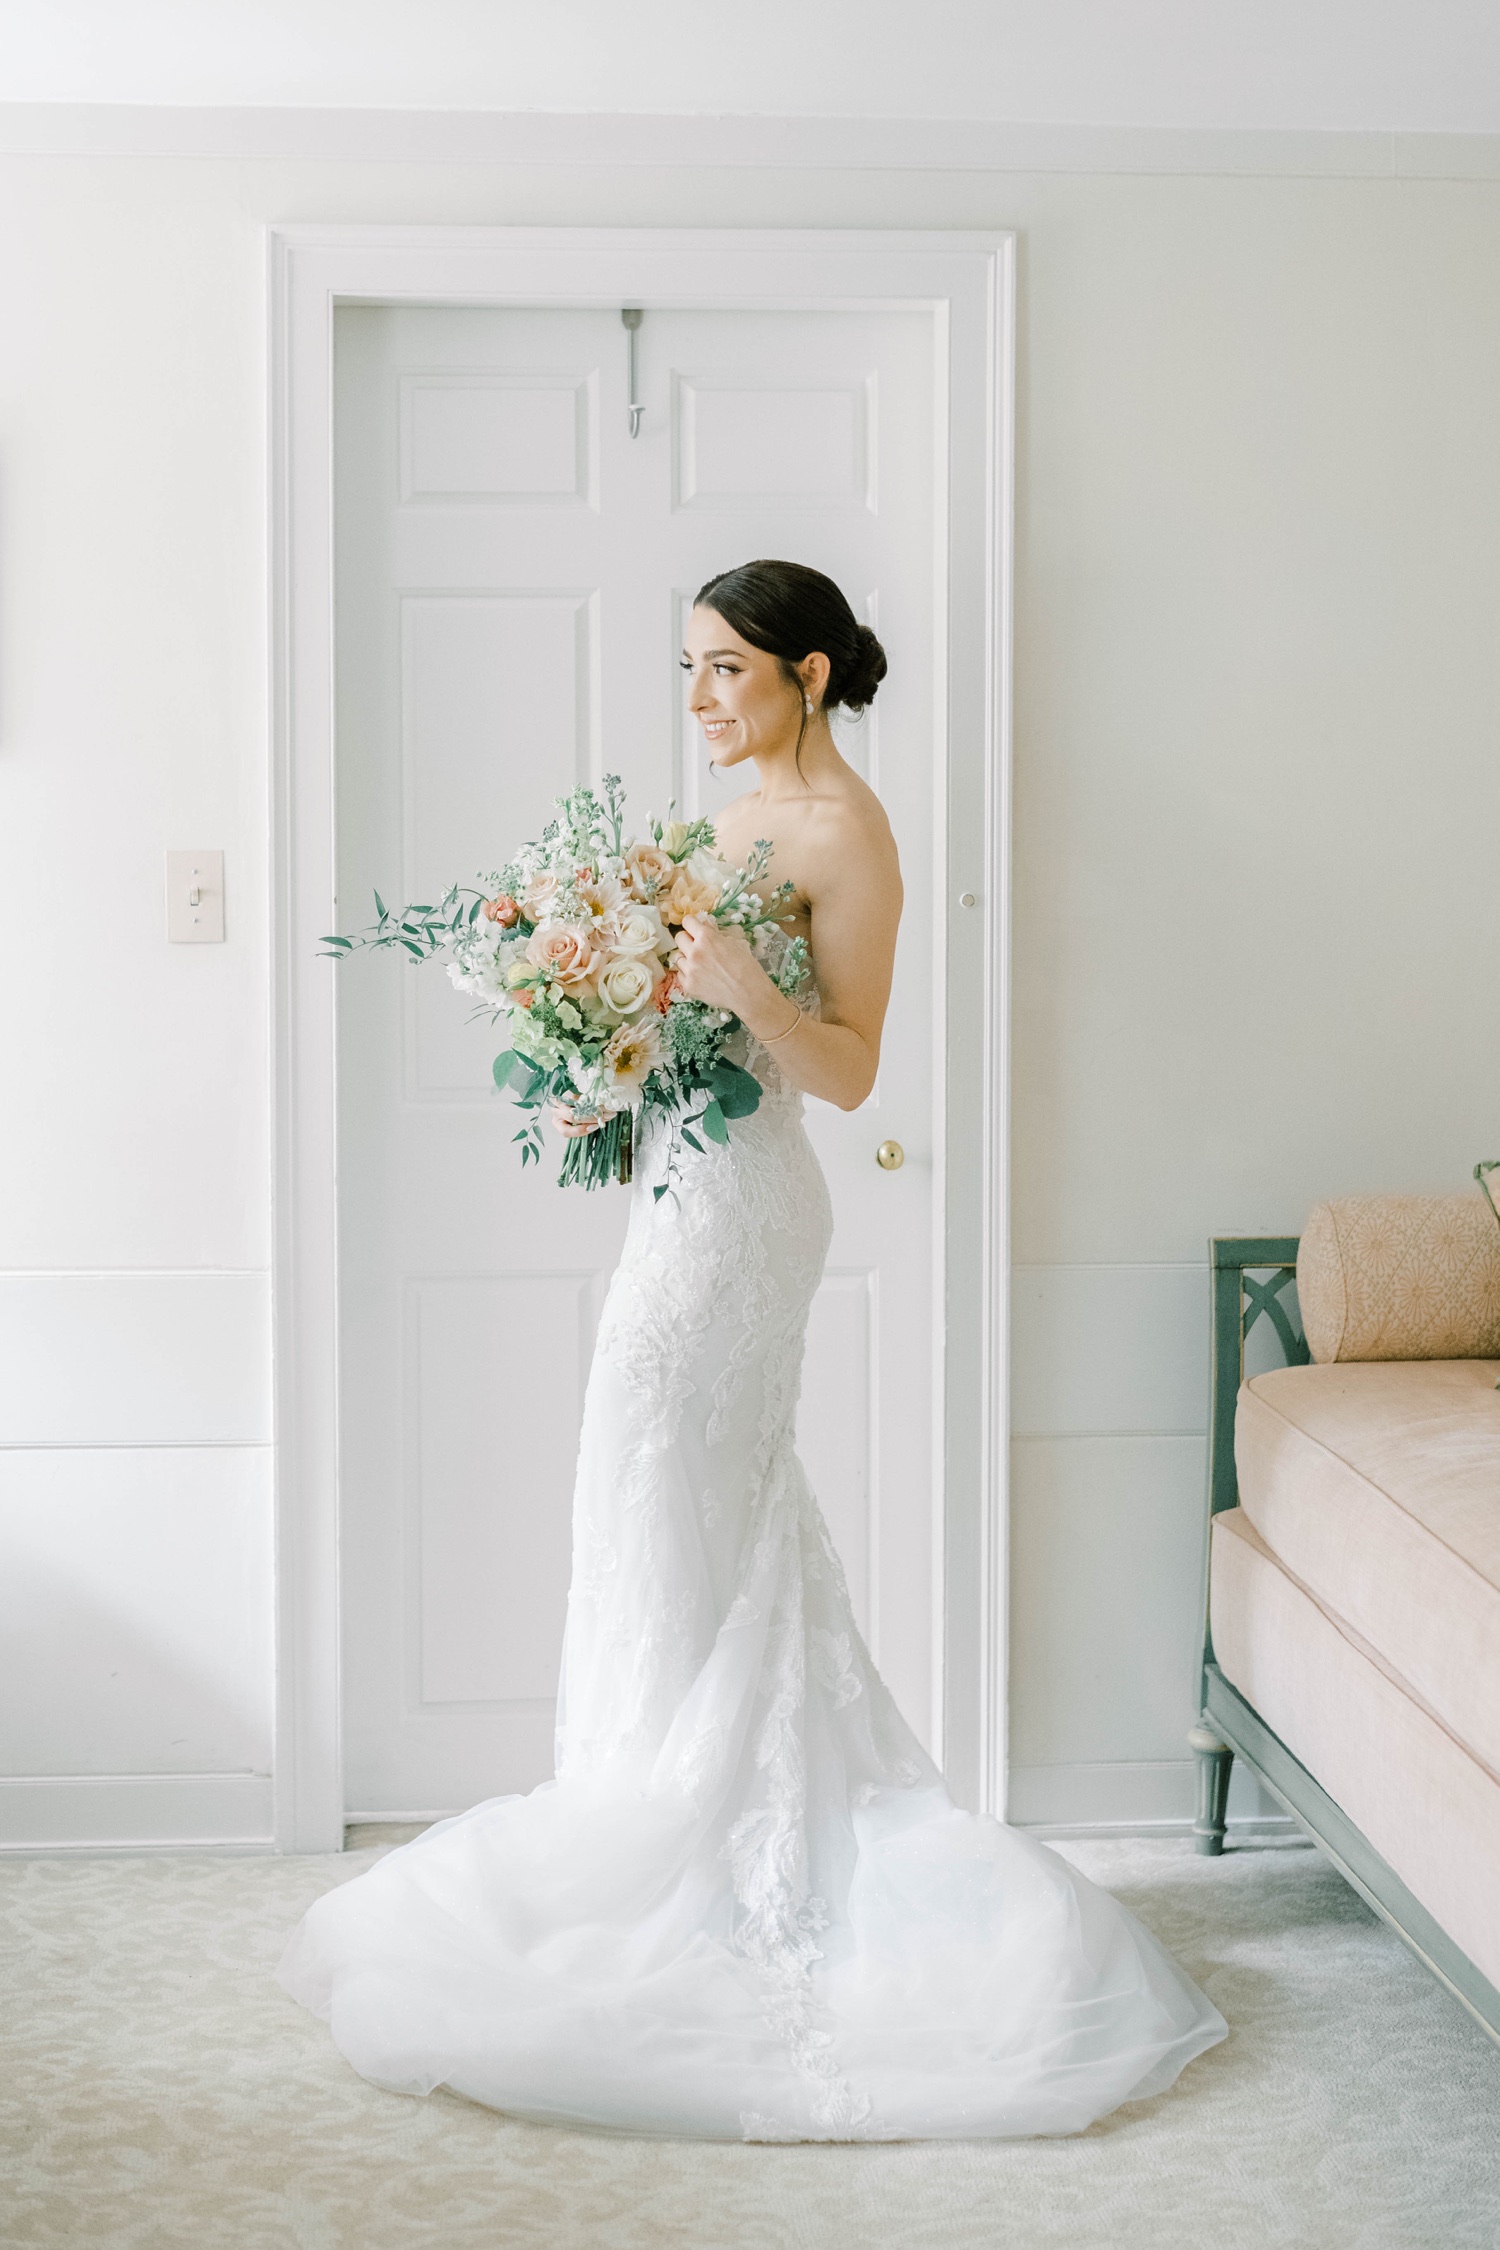 Appleford Estate Summer Wedding | Philadelphia Wedding Photographer